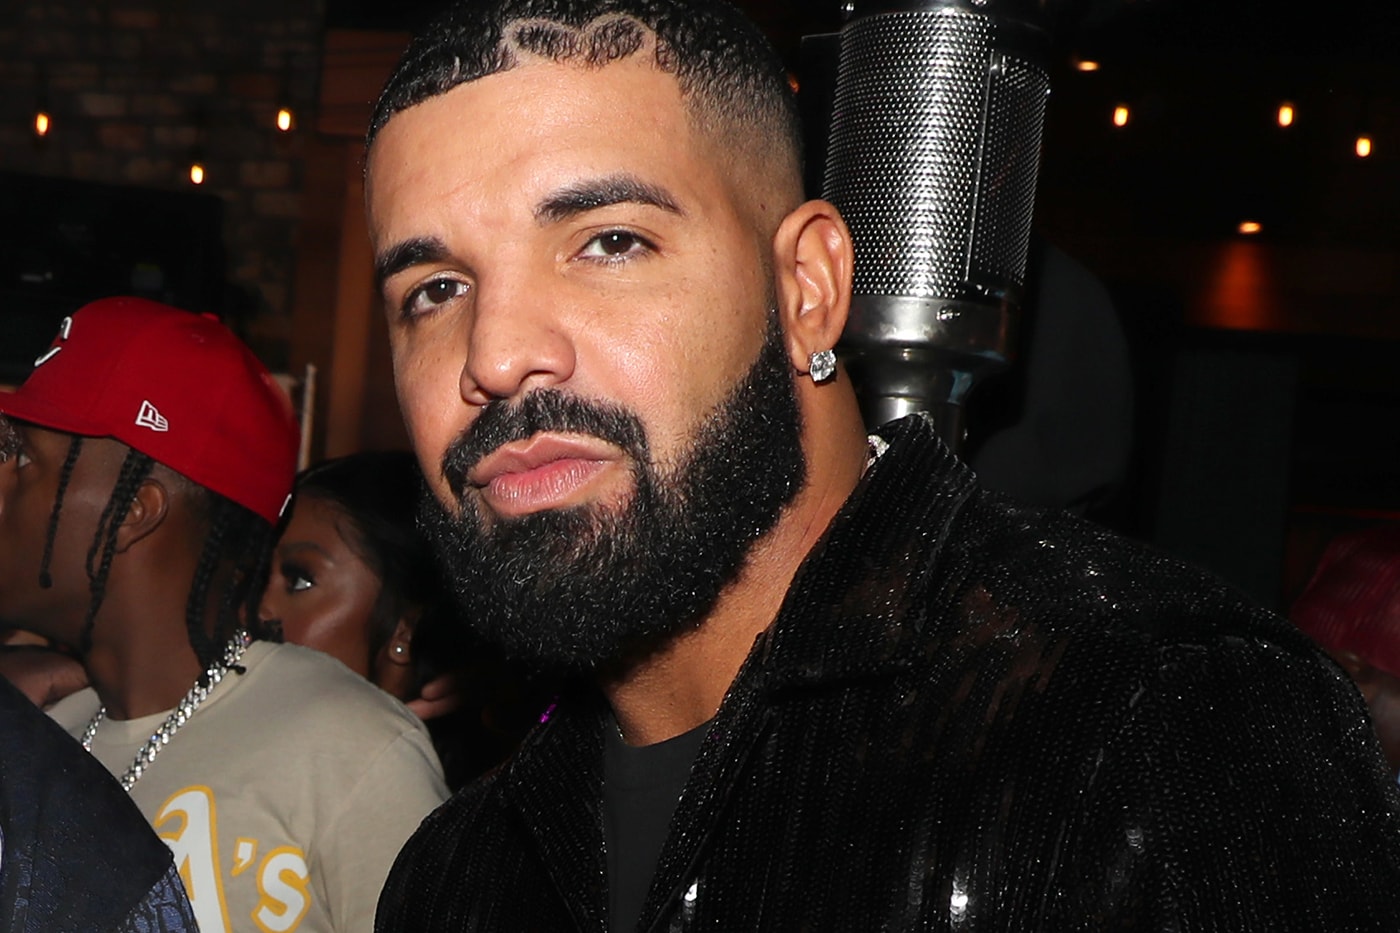 Drake certified lover boy Don Toliver Life of a Don billboard 200 Projections debut cactus jack travis scott